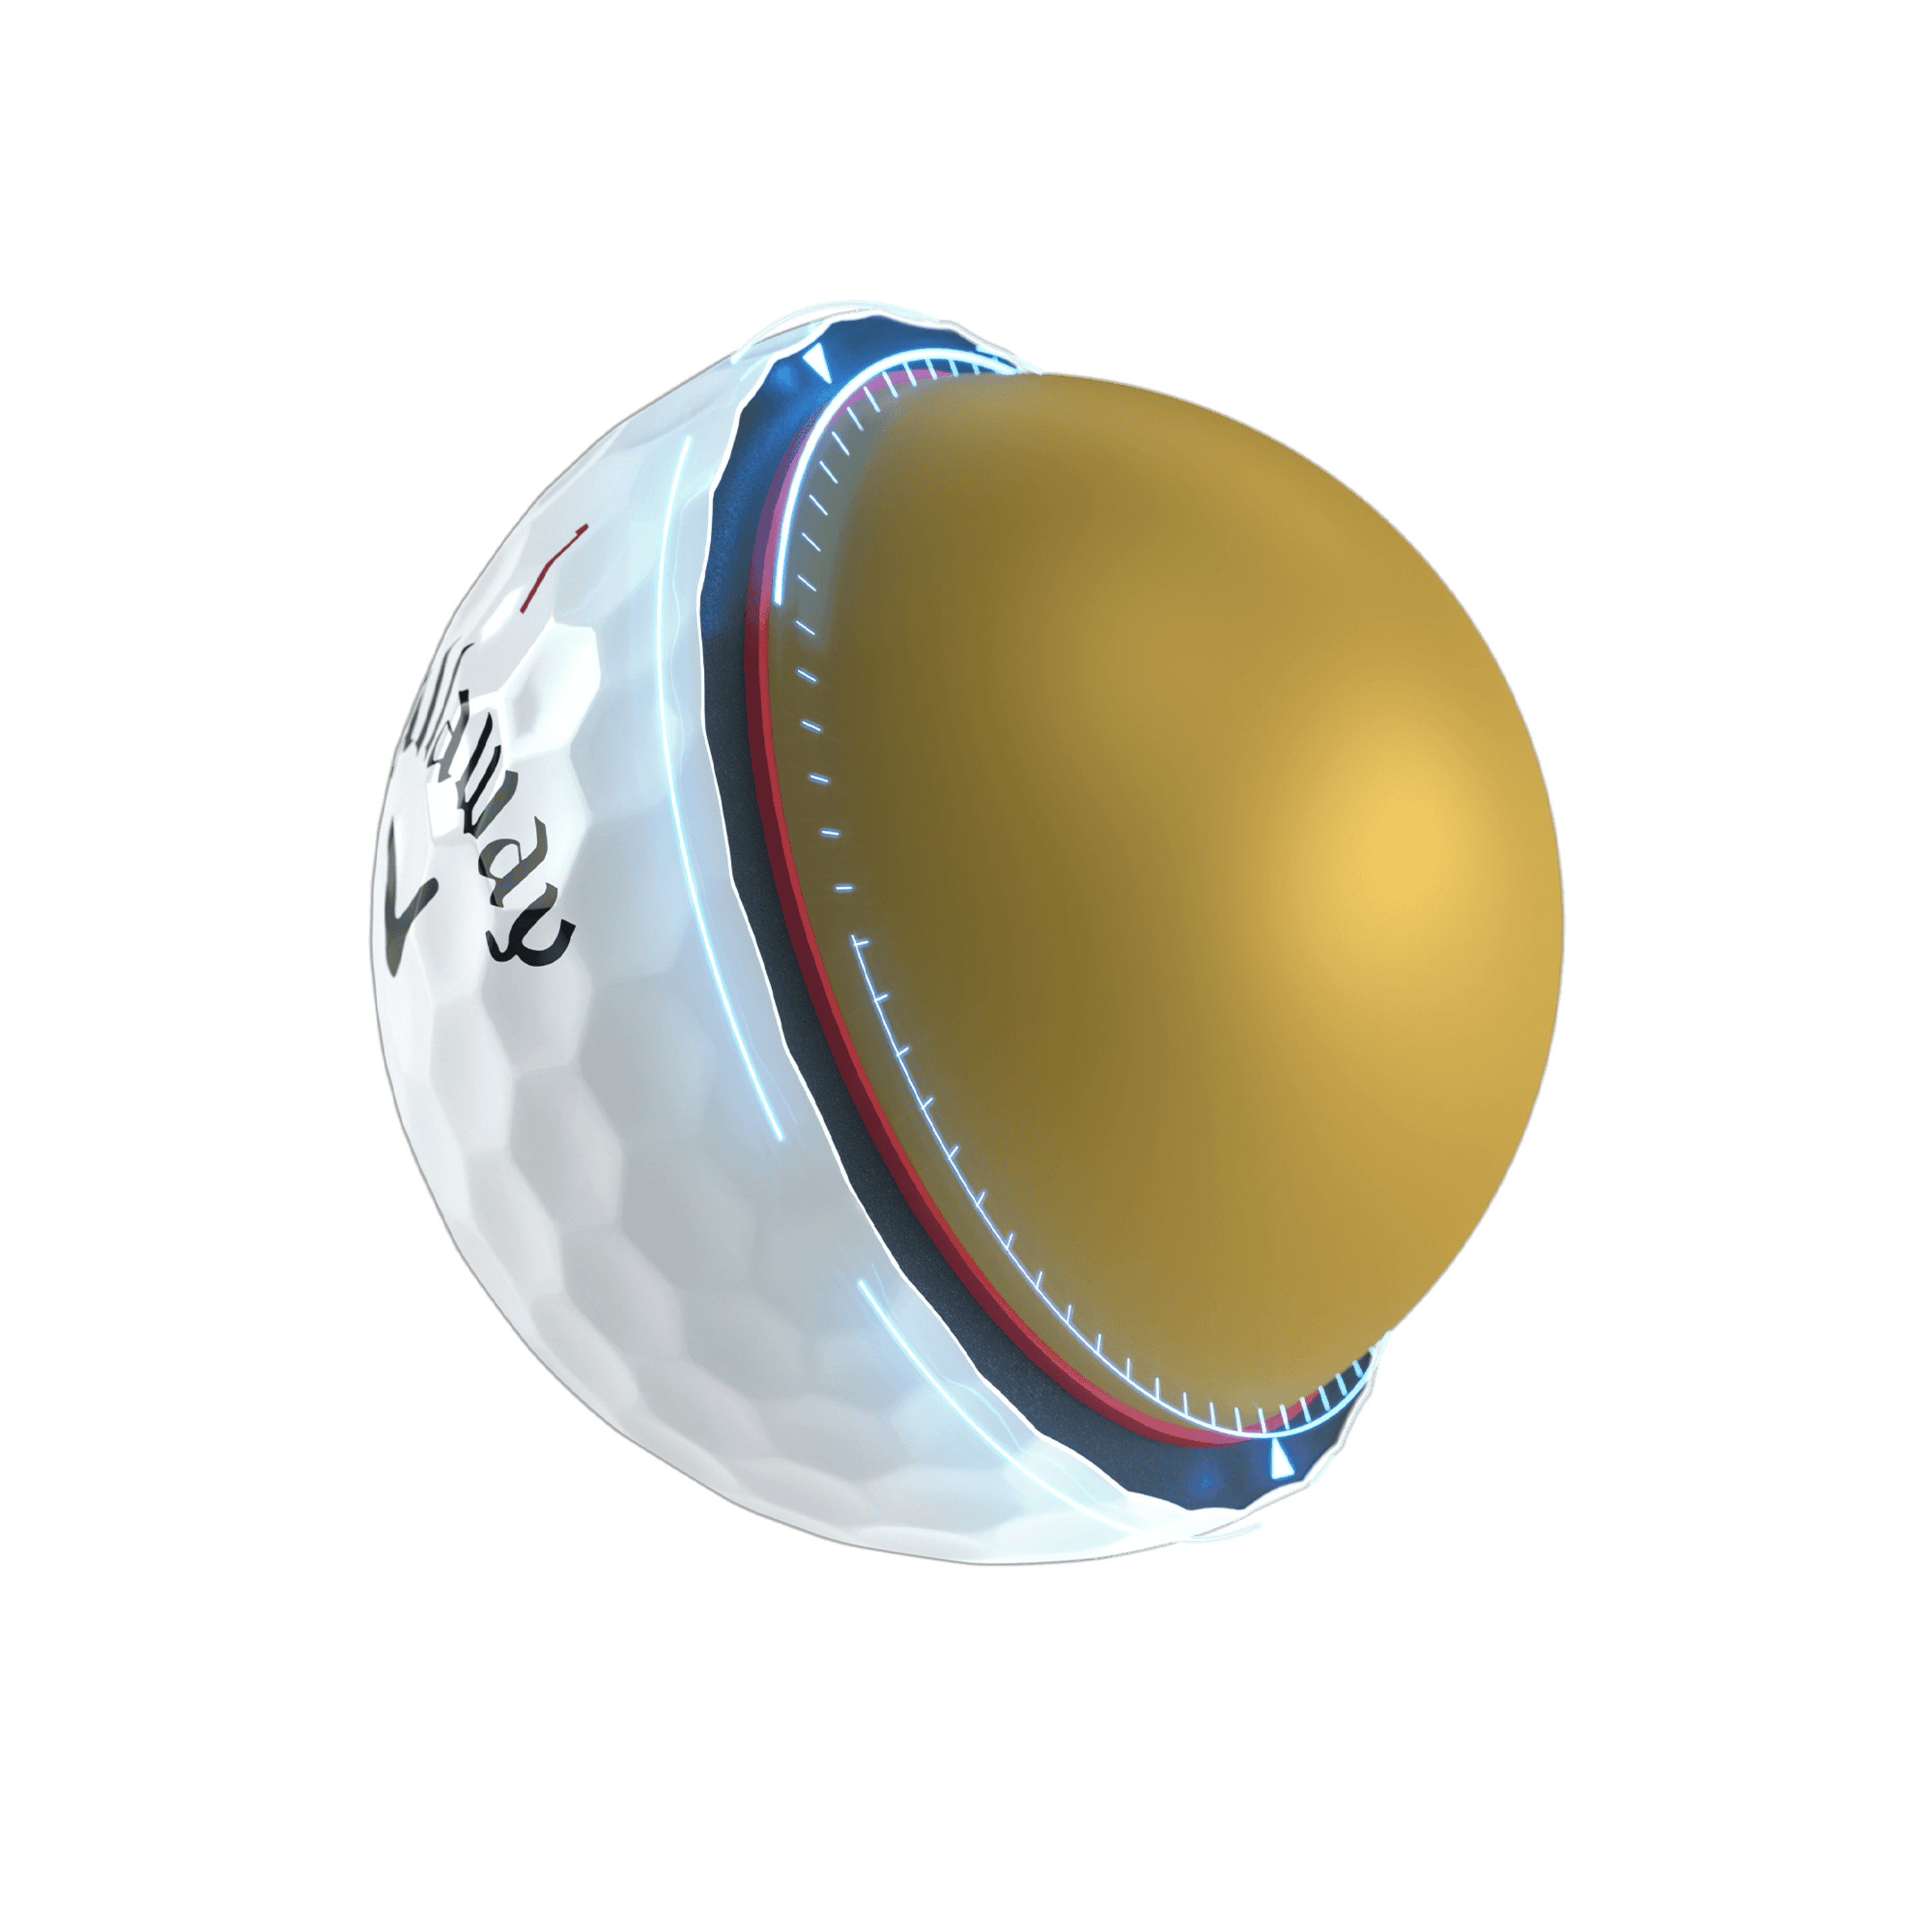 Chrome Tour white golf balls